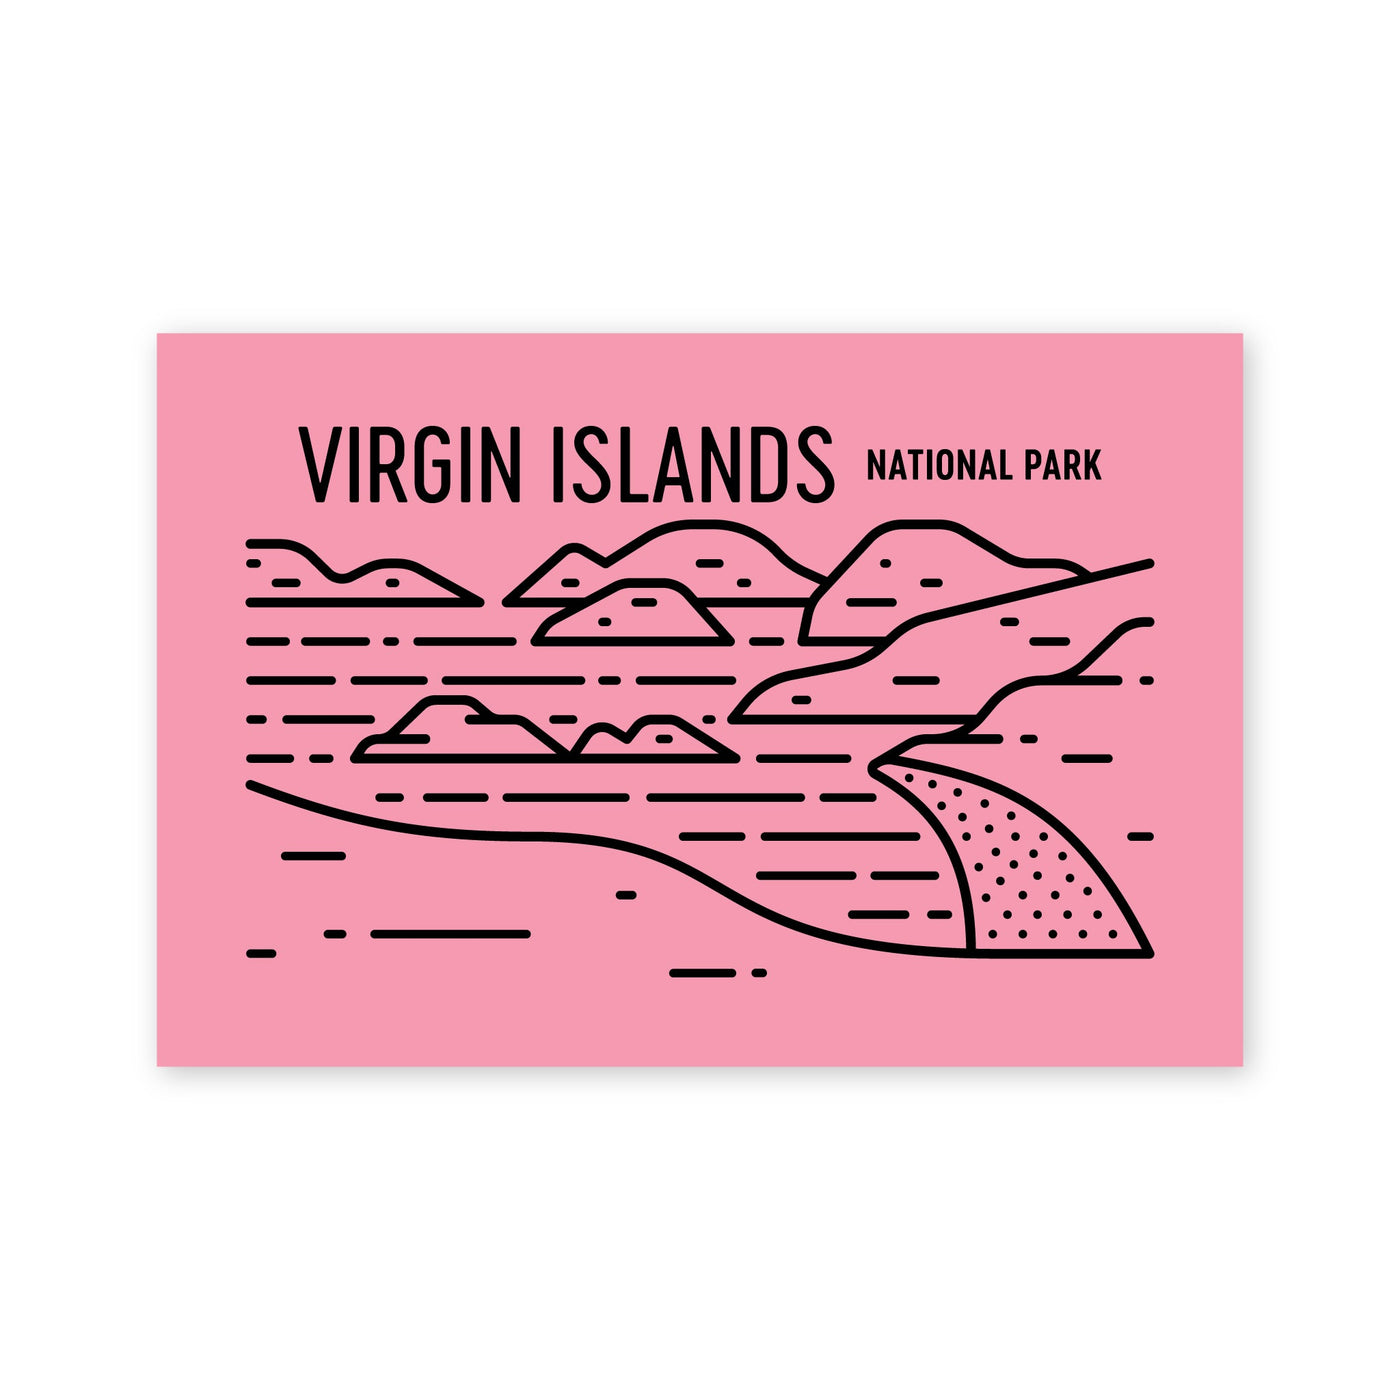 Virgin Islands National Park Postcard